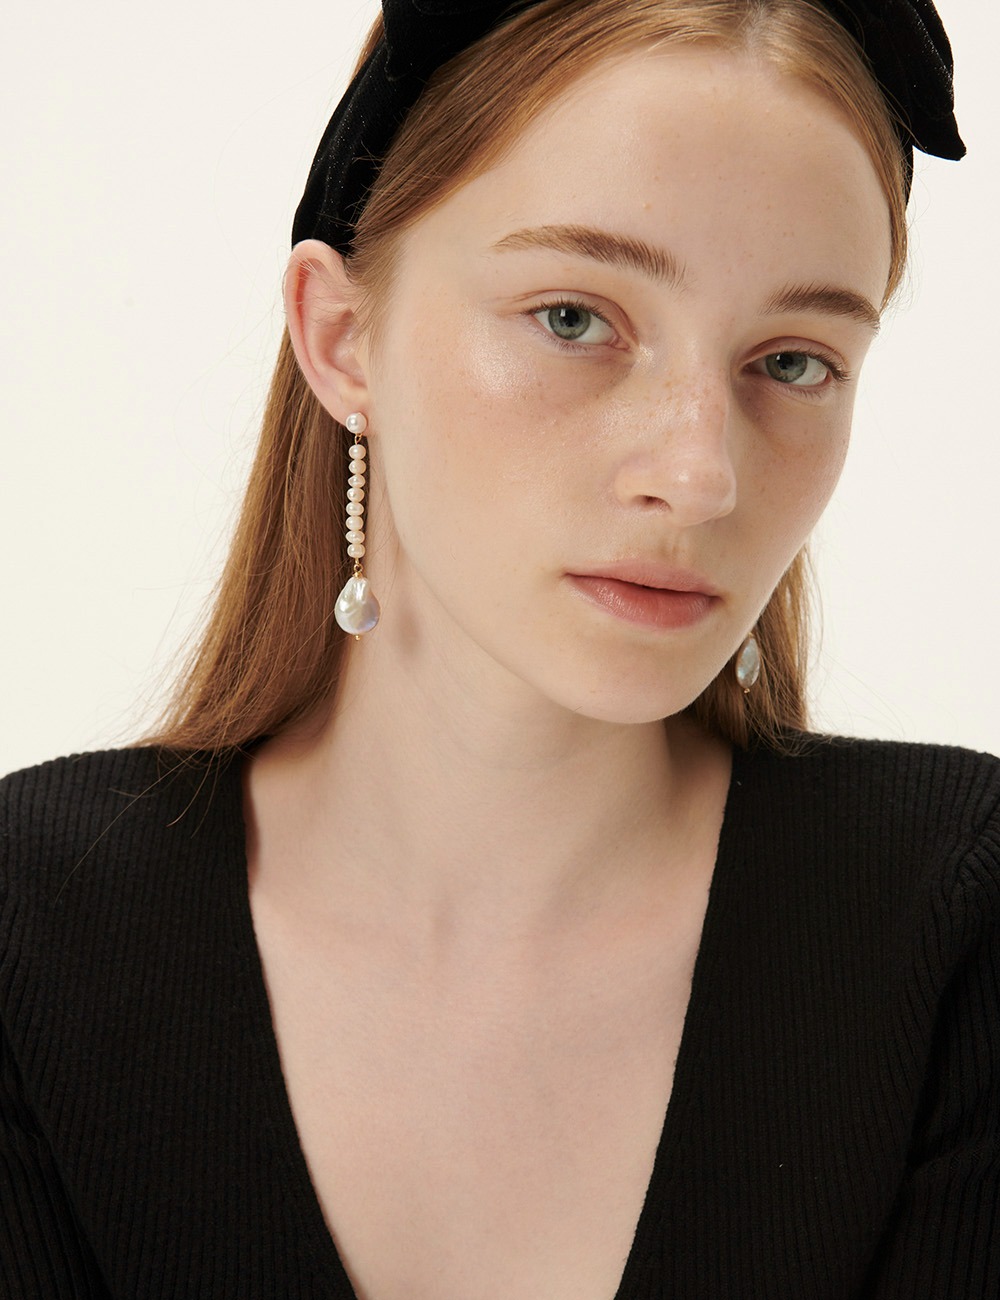 Classic freshwater pearl drop earrings